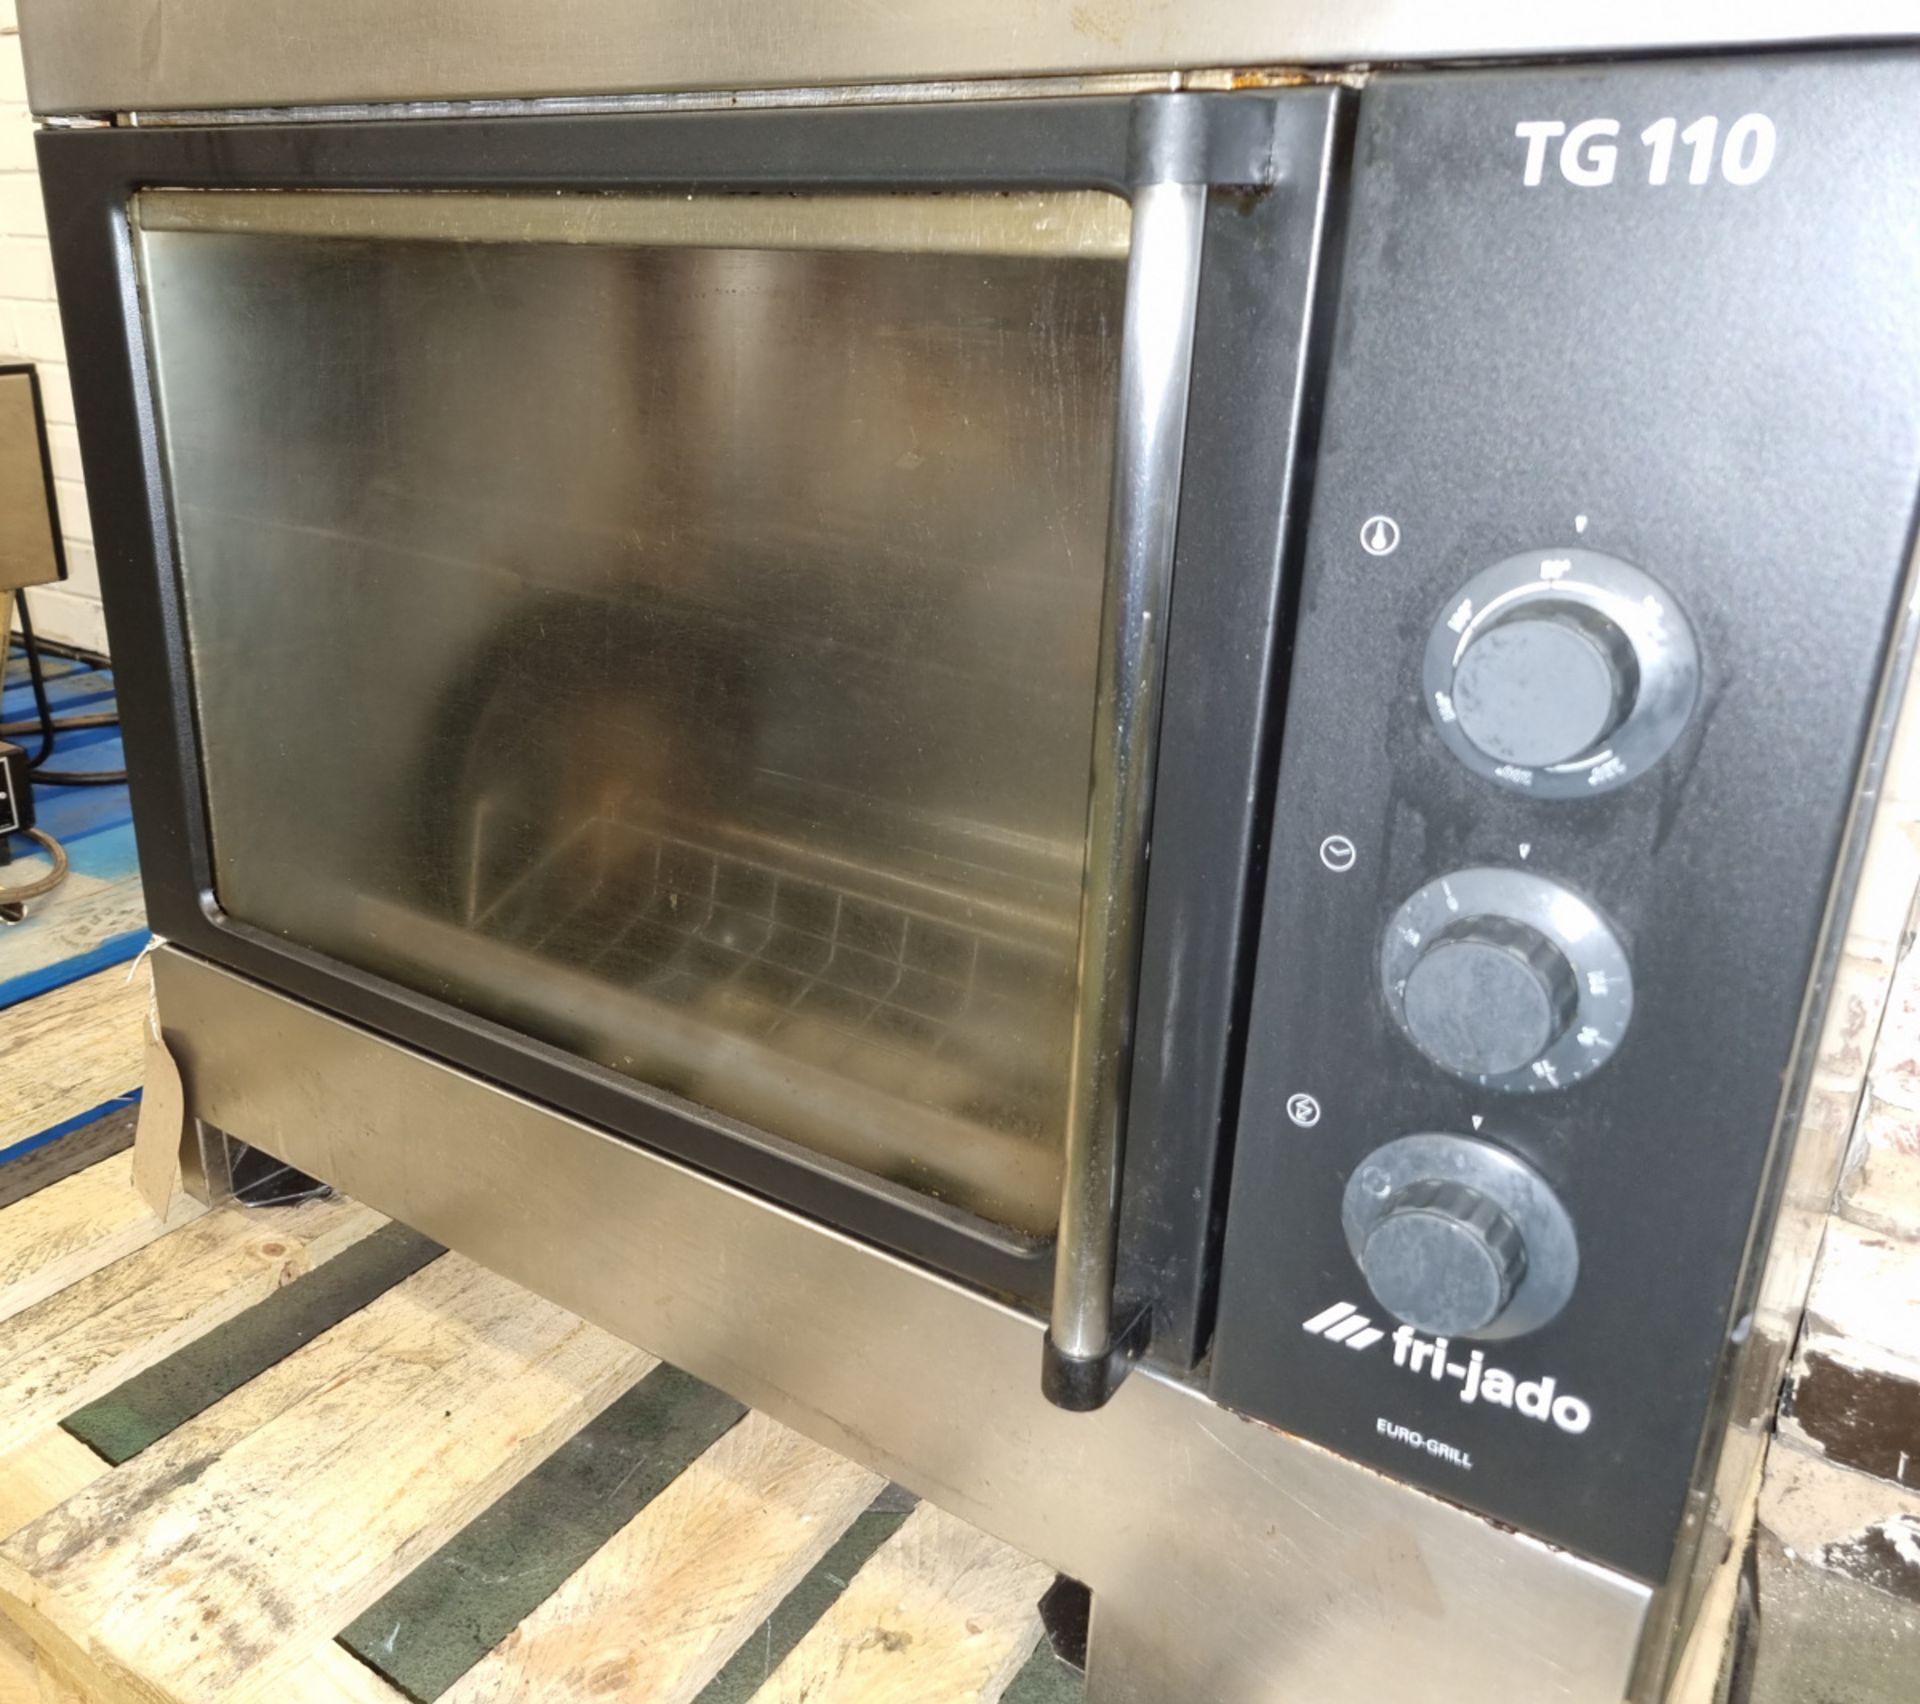 Fri-Jado TG110-M electric rotisserie oven - 84x55x75cm - Image 3 of 7